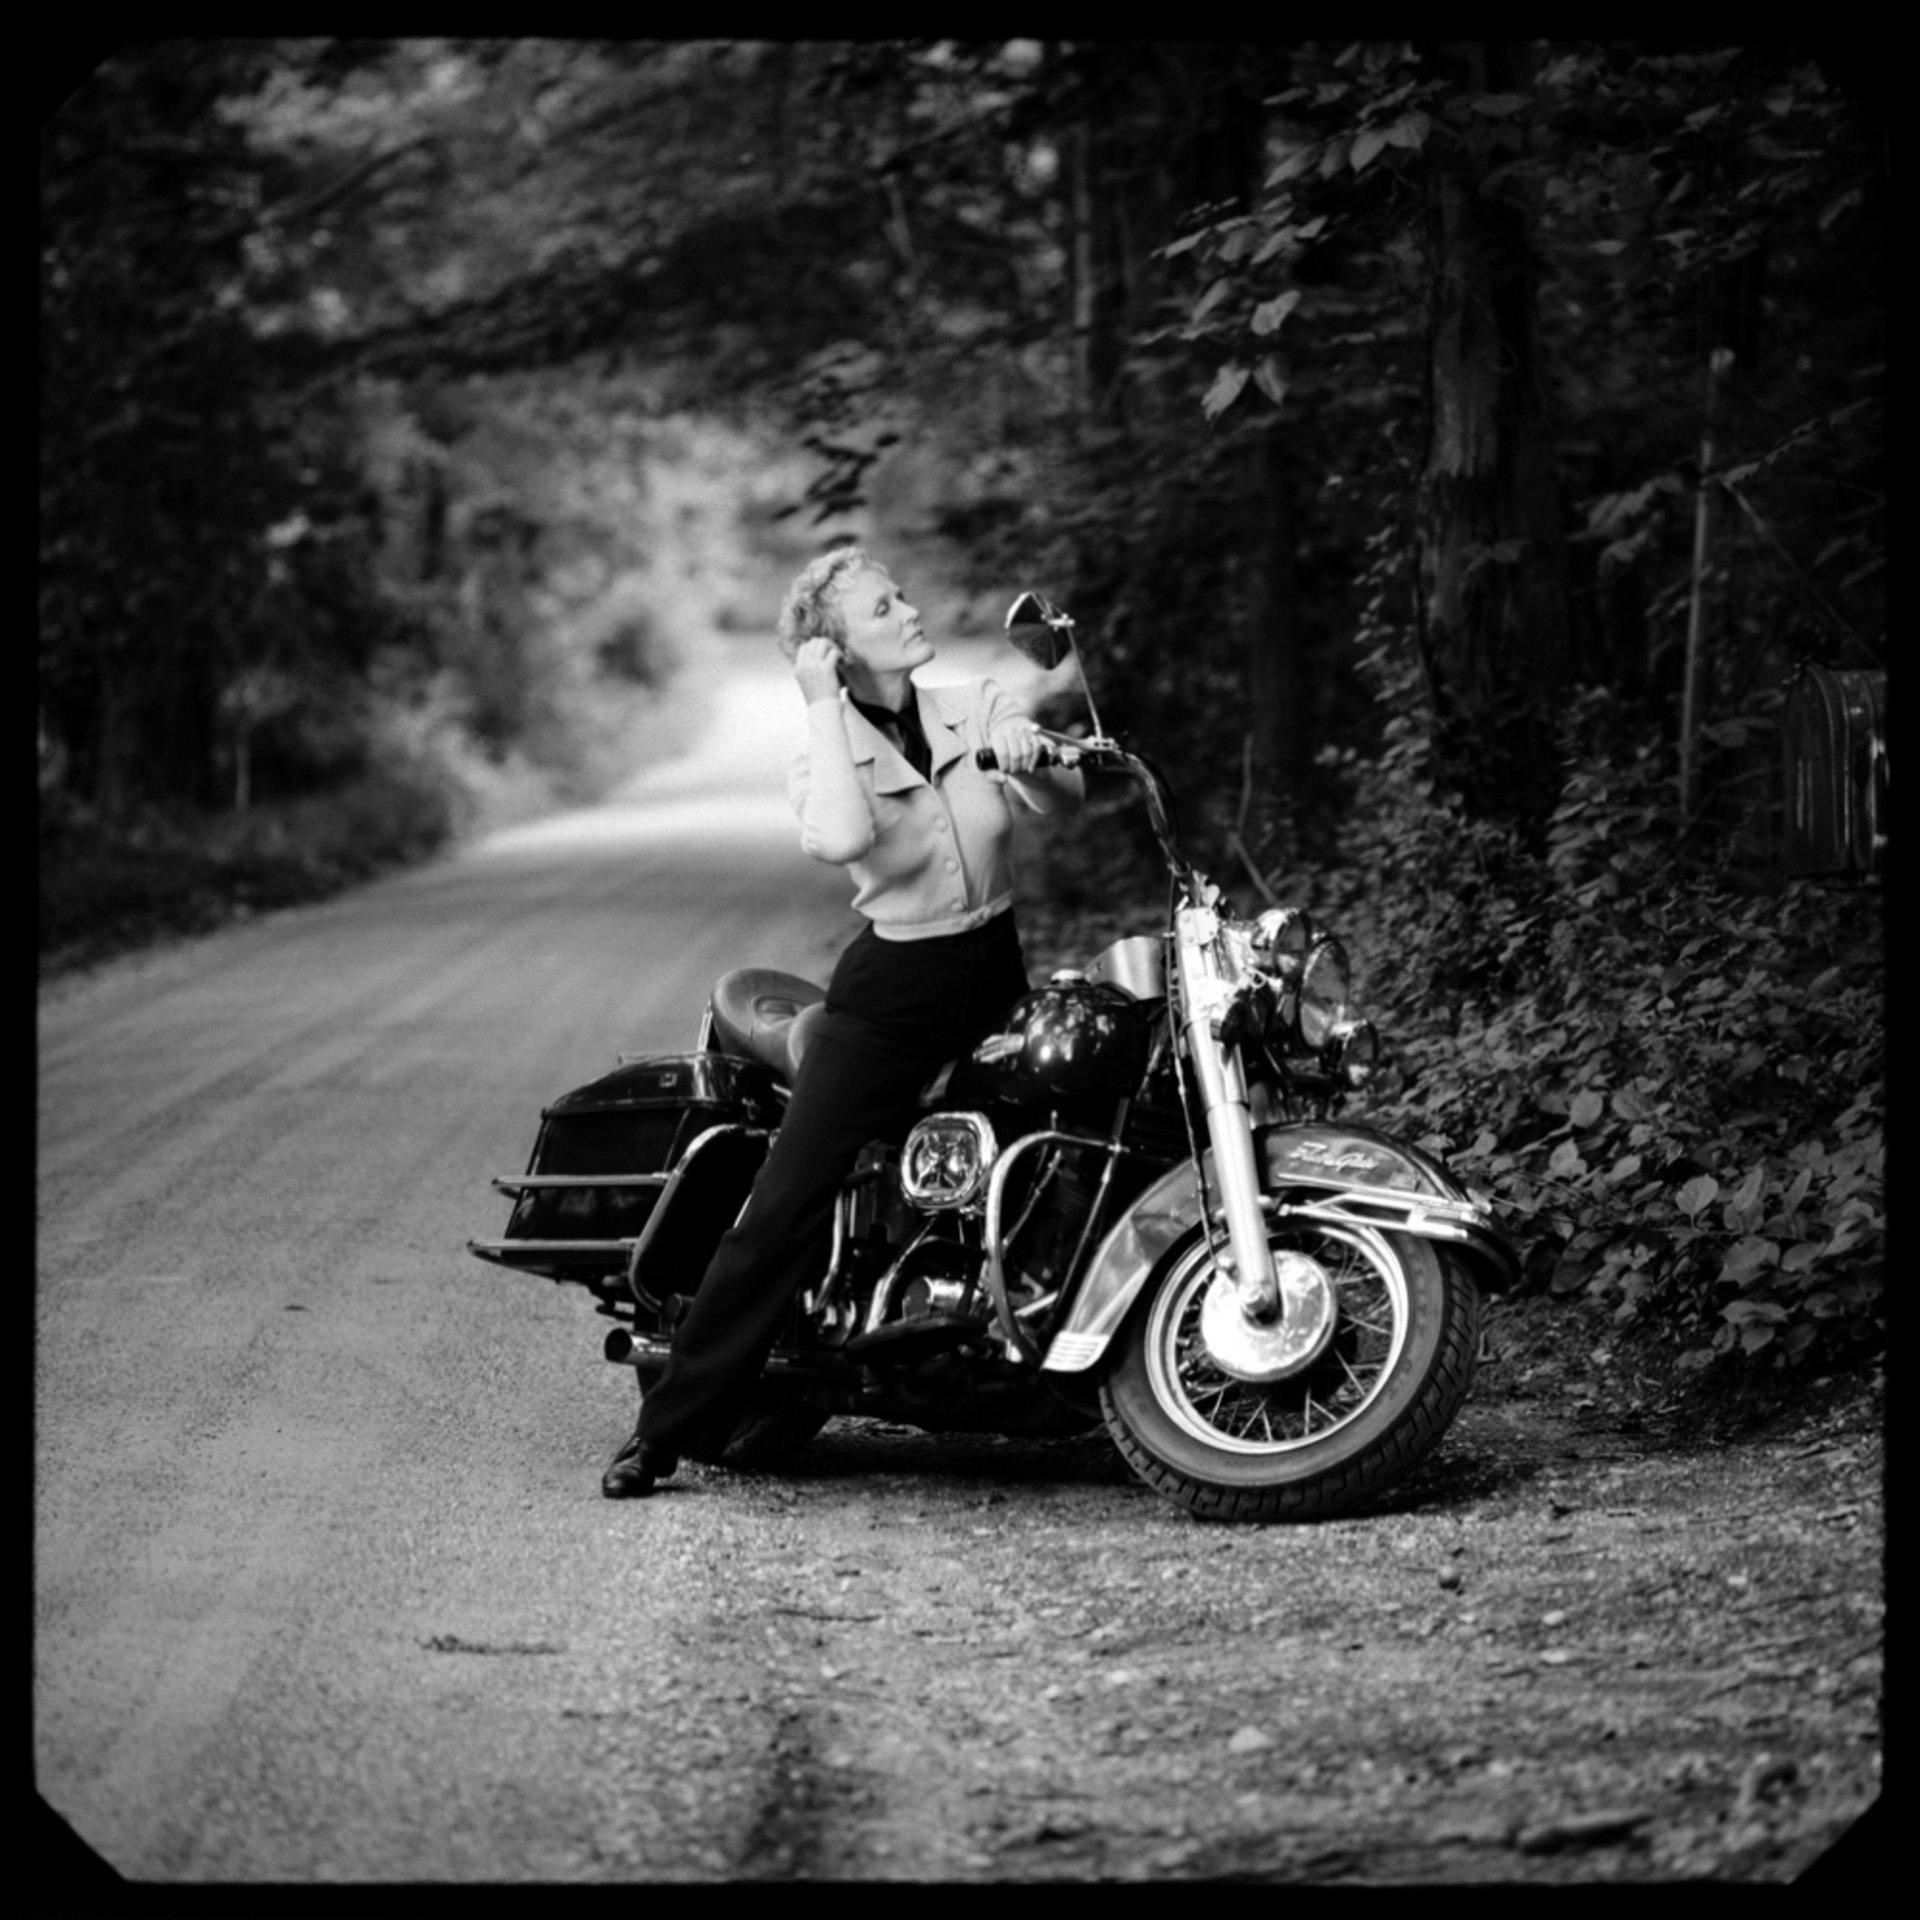 96095 Glenn Close on Motorcycle 665 BW by Timothy White